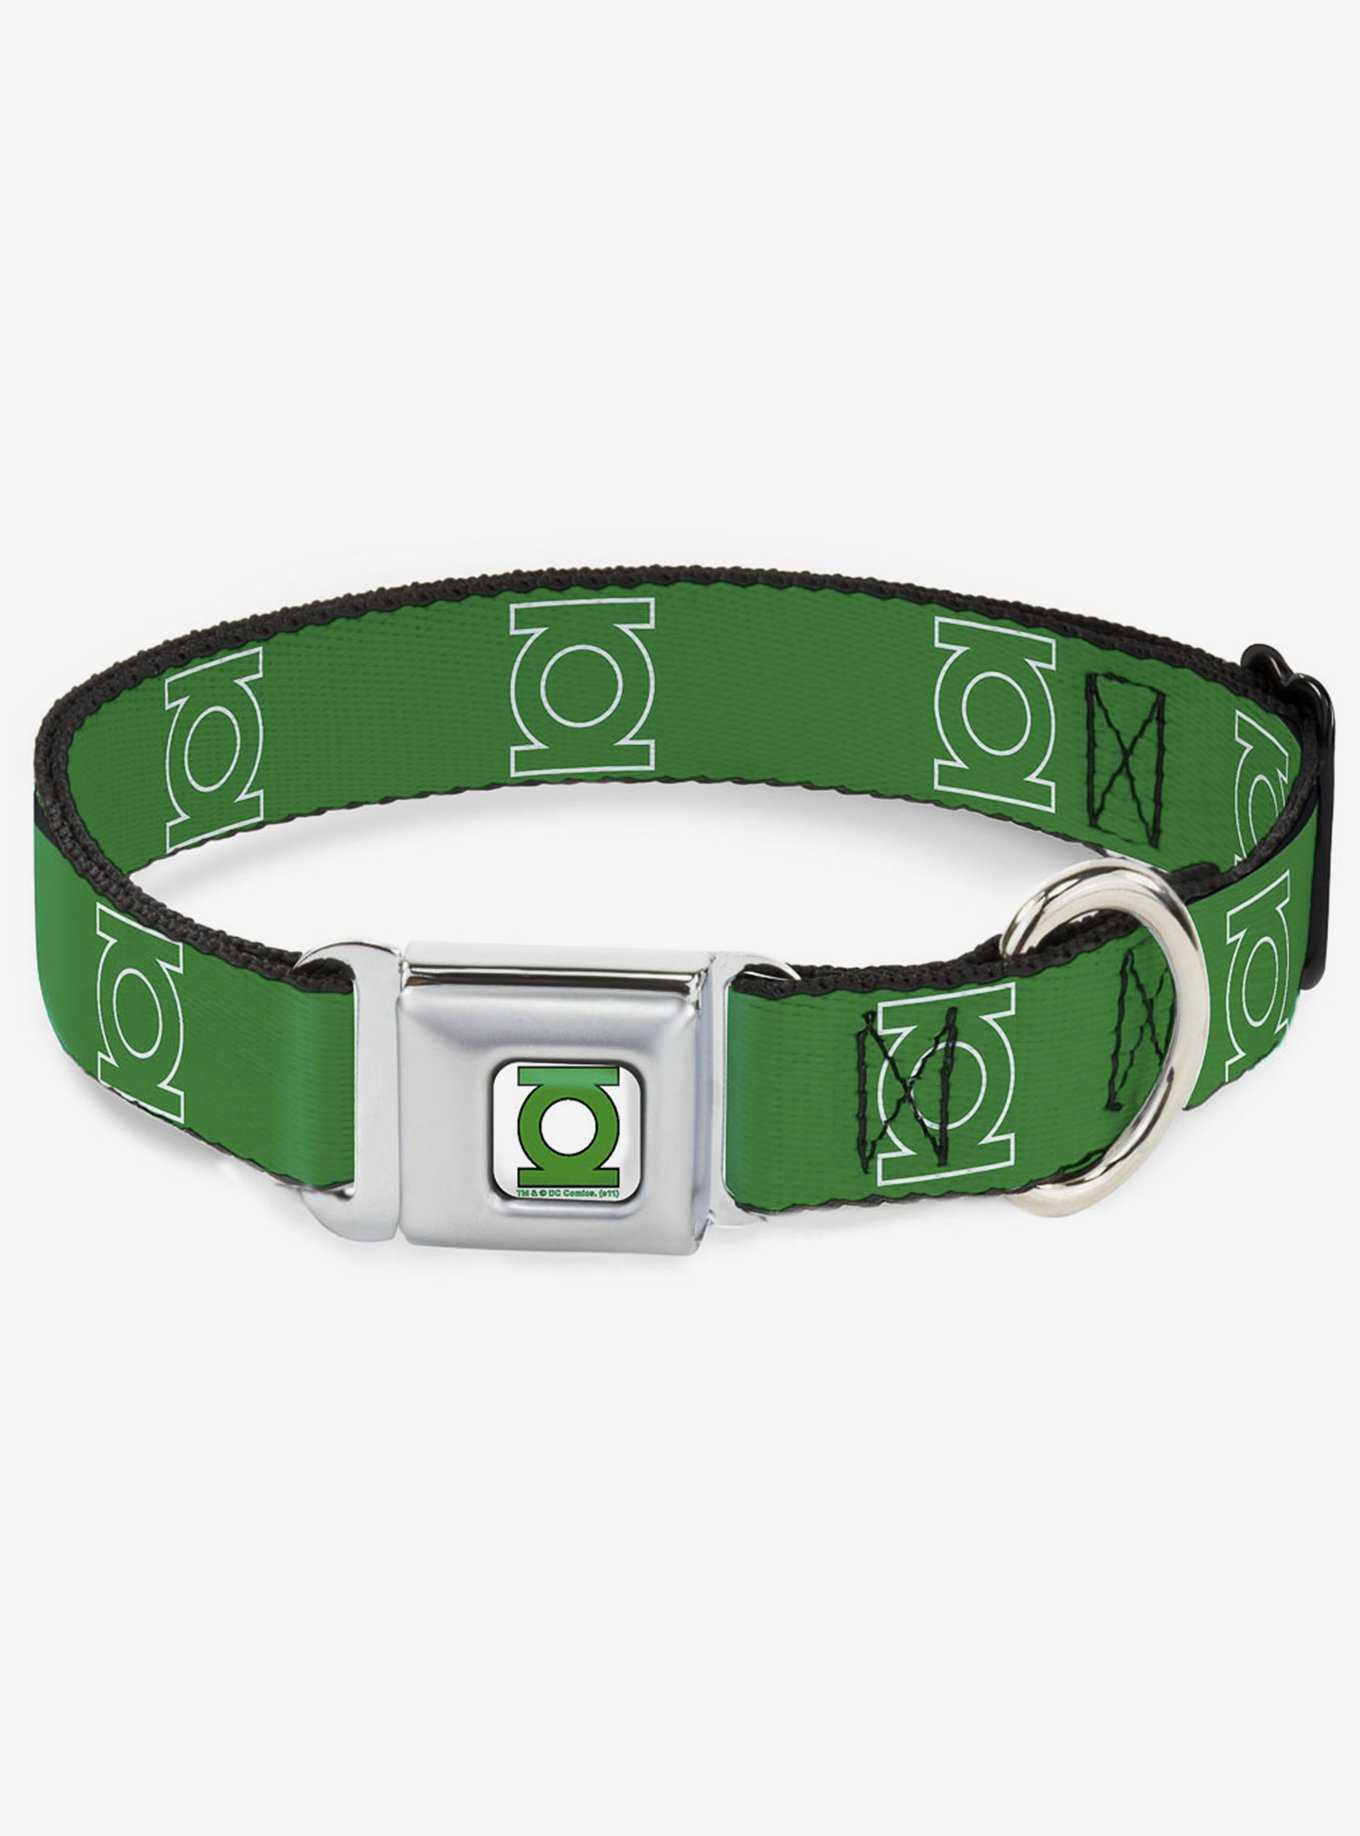 DC Comics Justice League Green Lantern Logo Green White Seatbelt Buckle Dog Collar, , hi-res